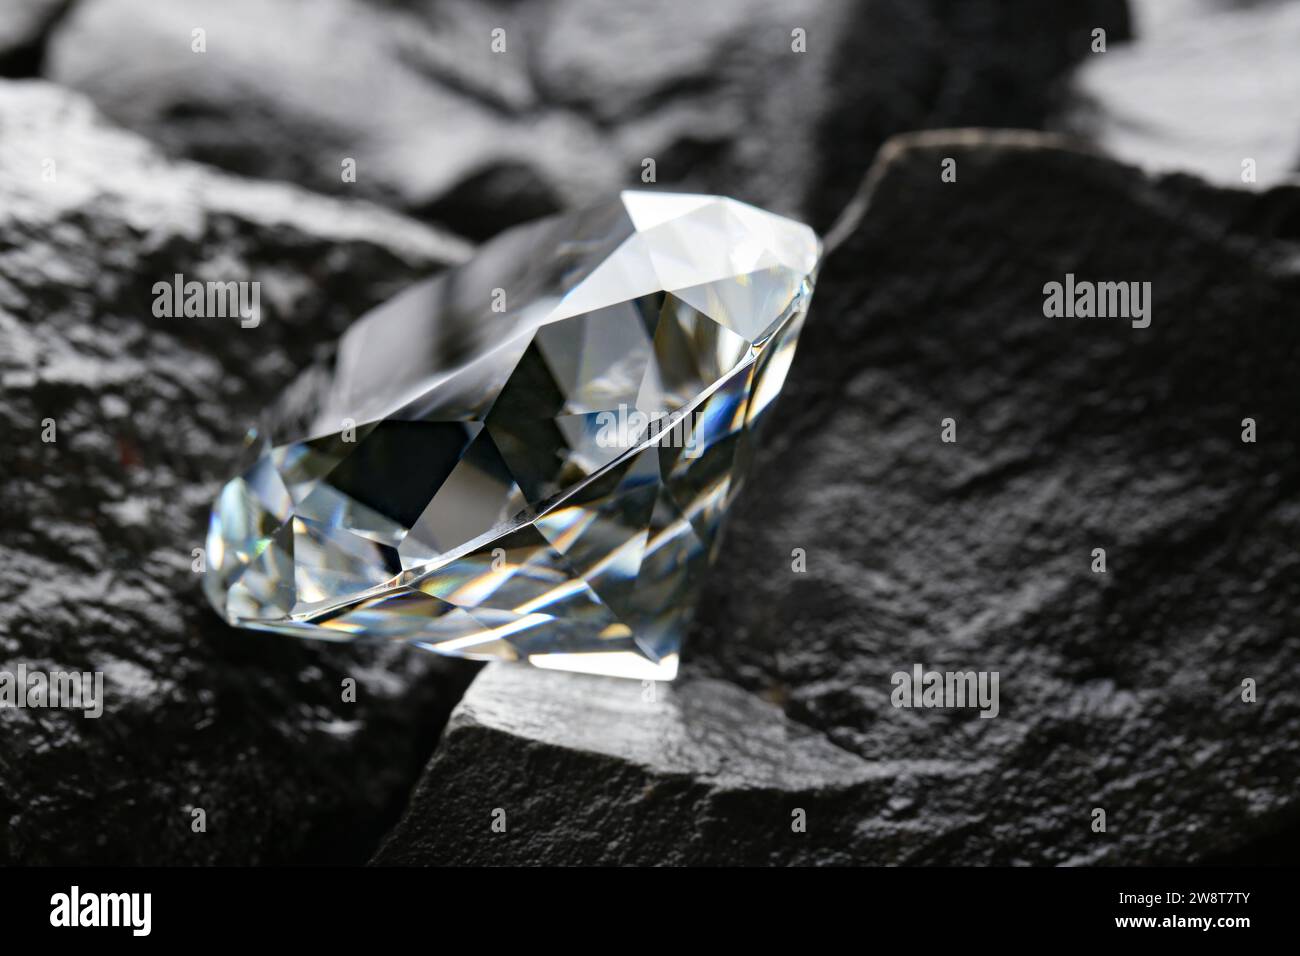 Beautiful shiny diamond on coal, closeup view Stock Photo